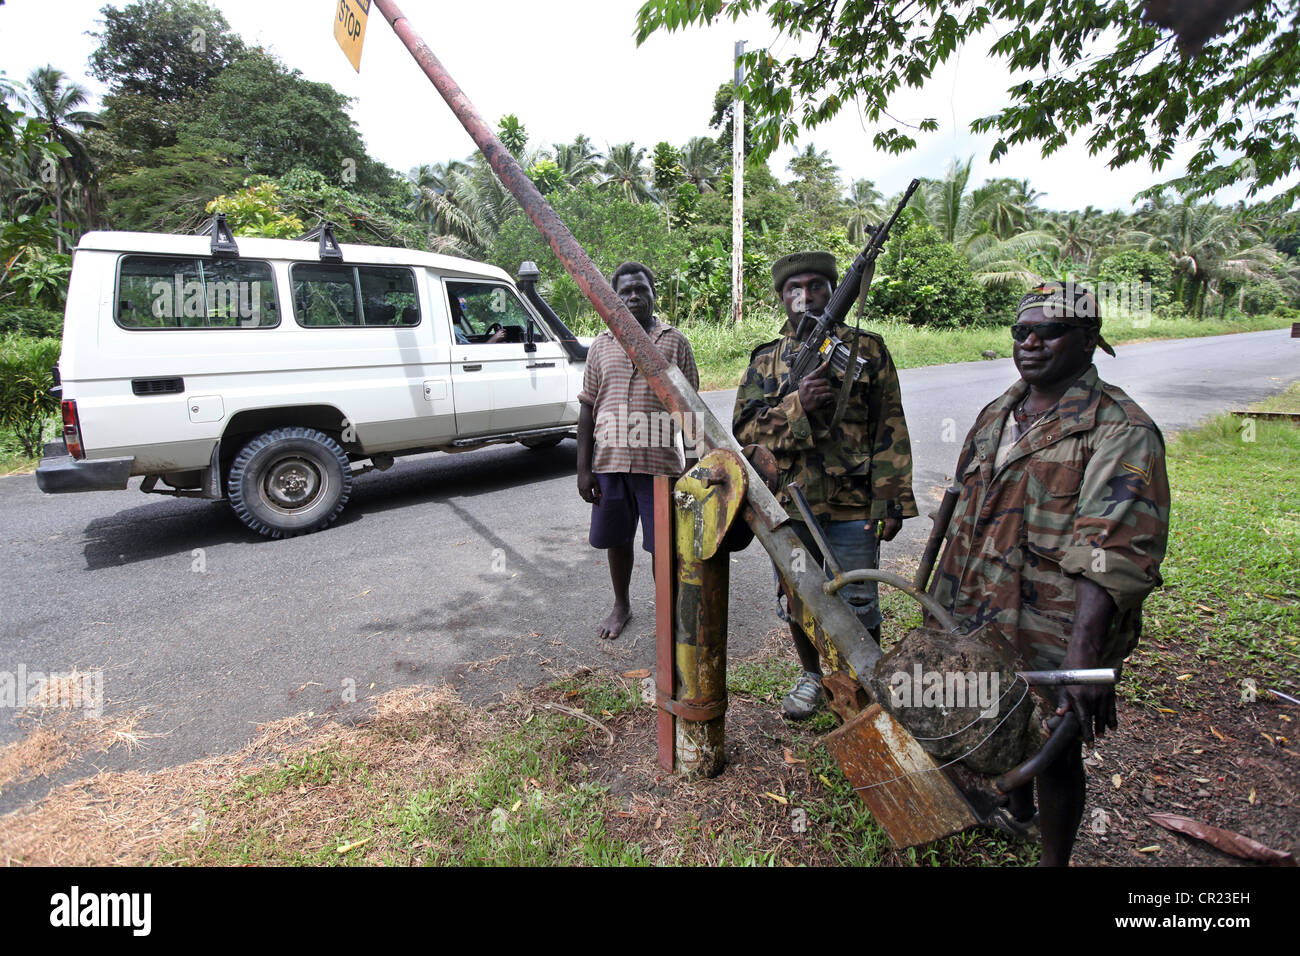 https://c8.alamy.com/comp/CR23EH/armed-bra-militants-guarding-the-street-to-the-panguna-copper-mine-CR23EH.jpg